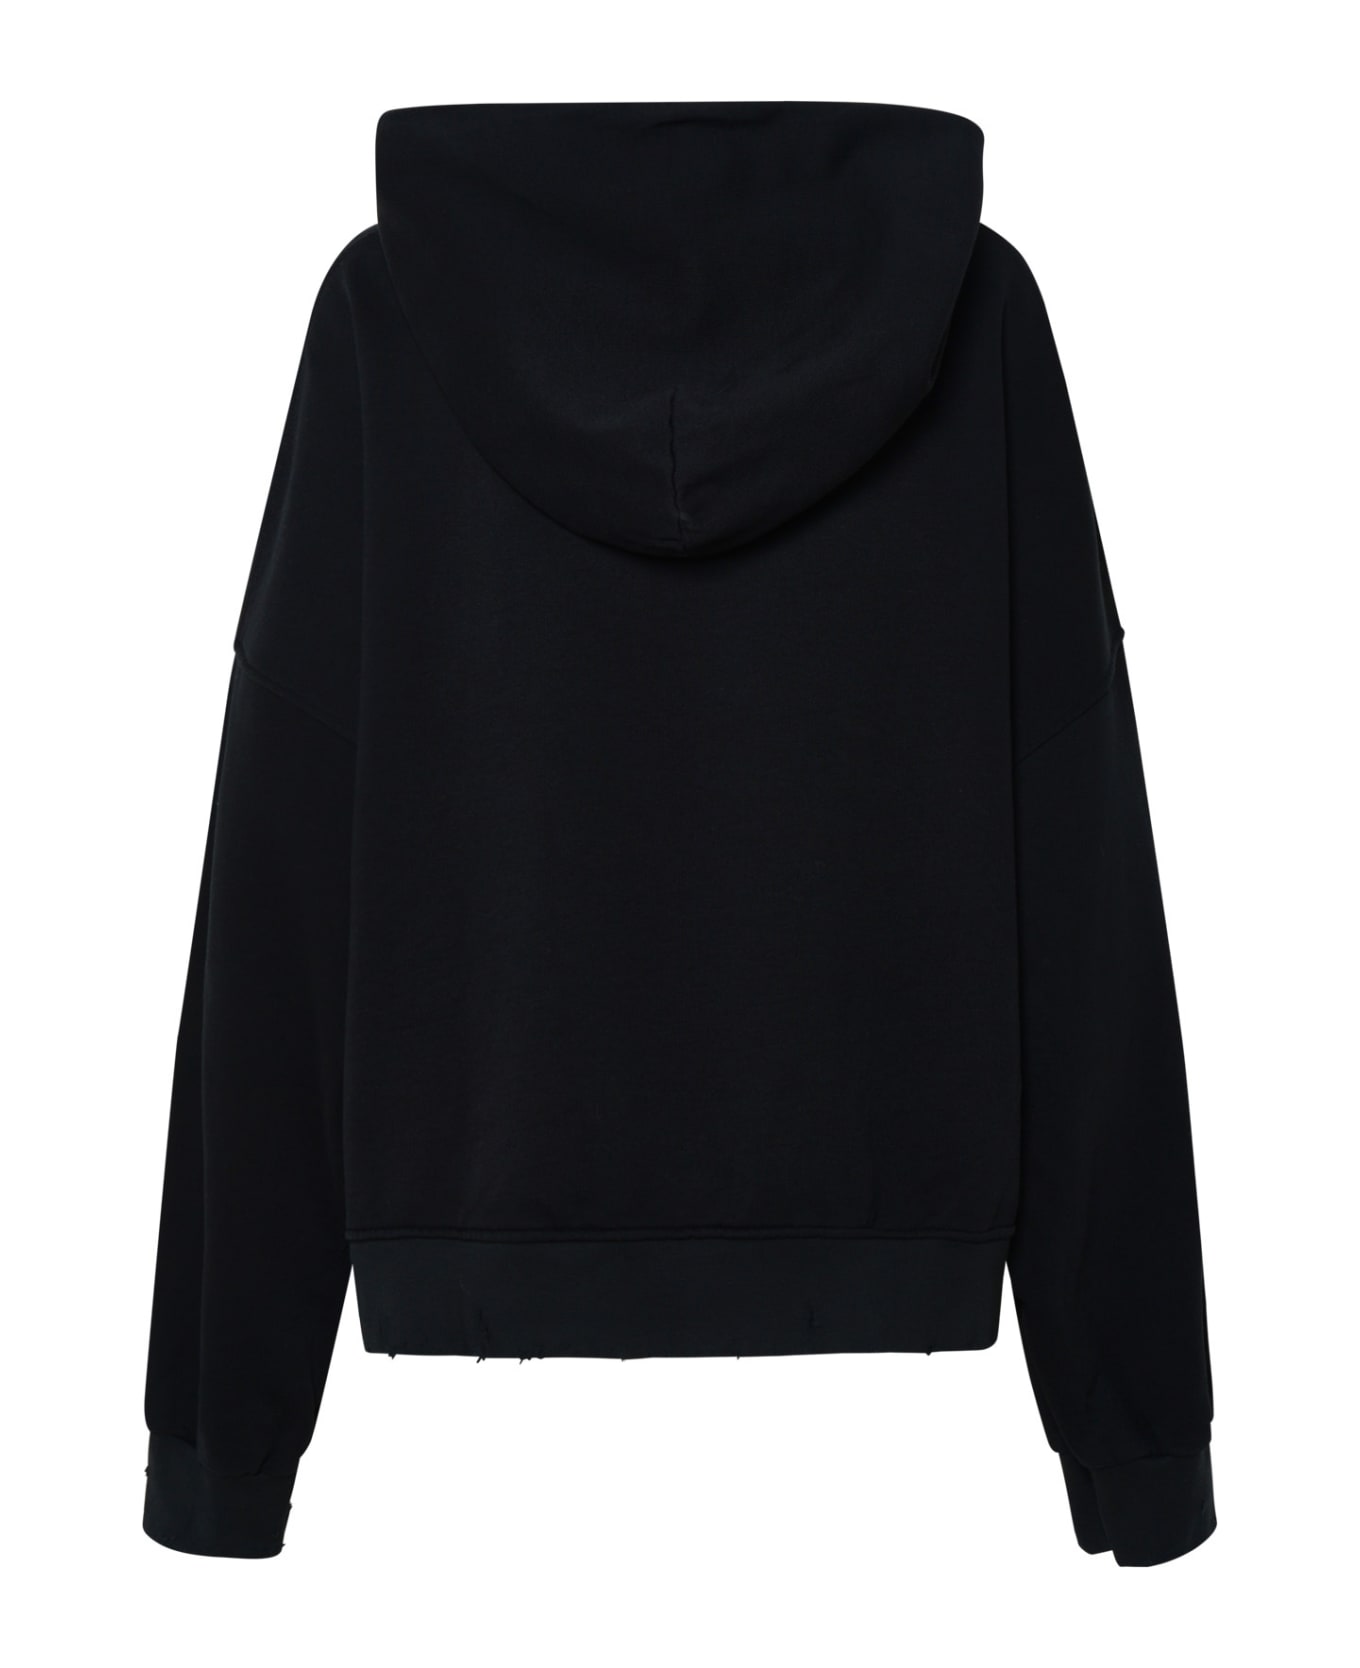 Barrow Black Cotton Sweatshirt - Black